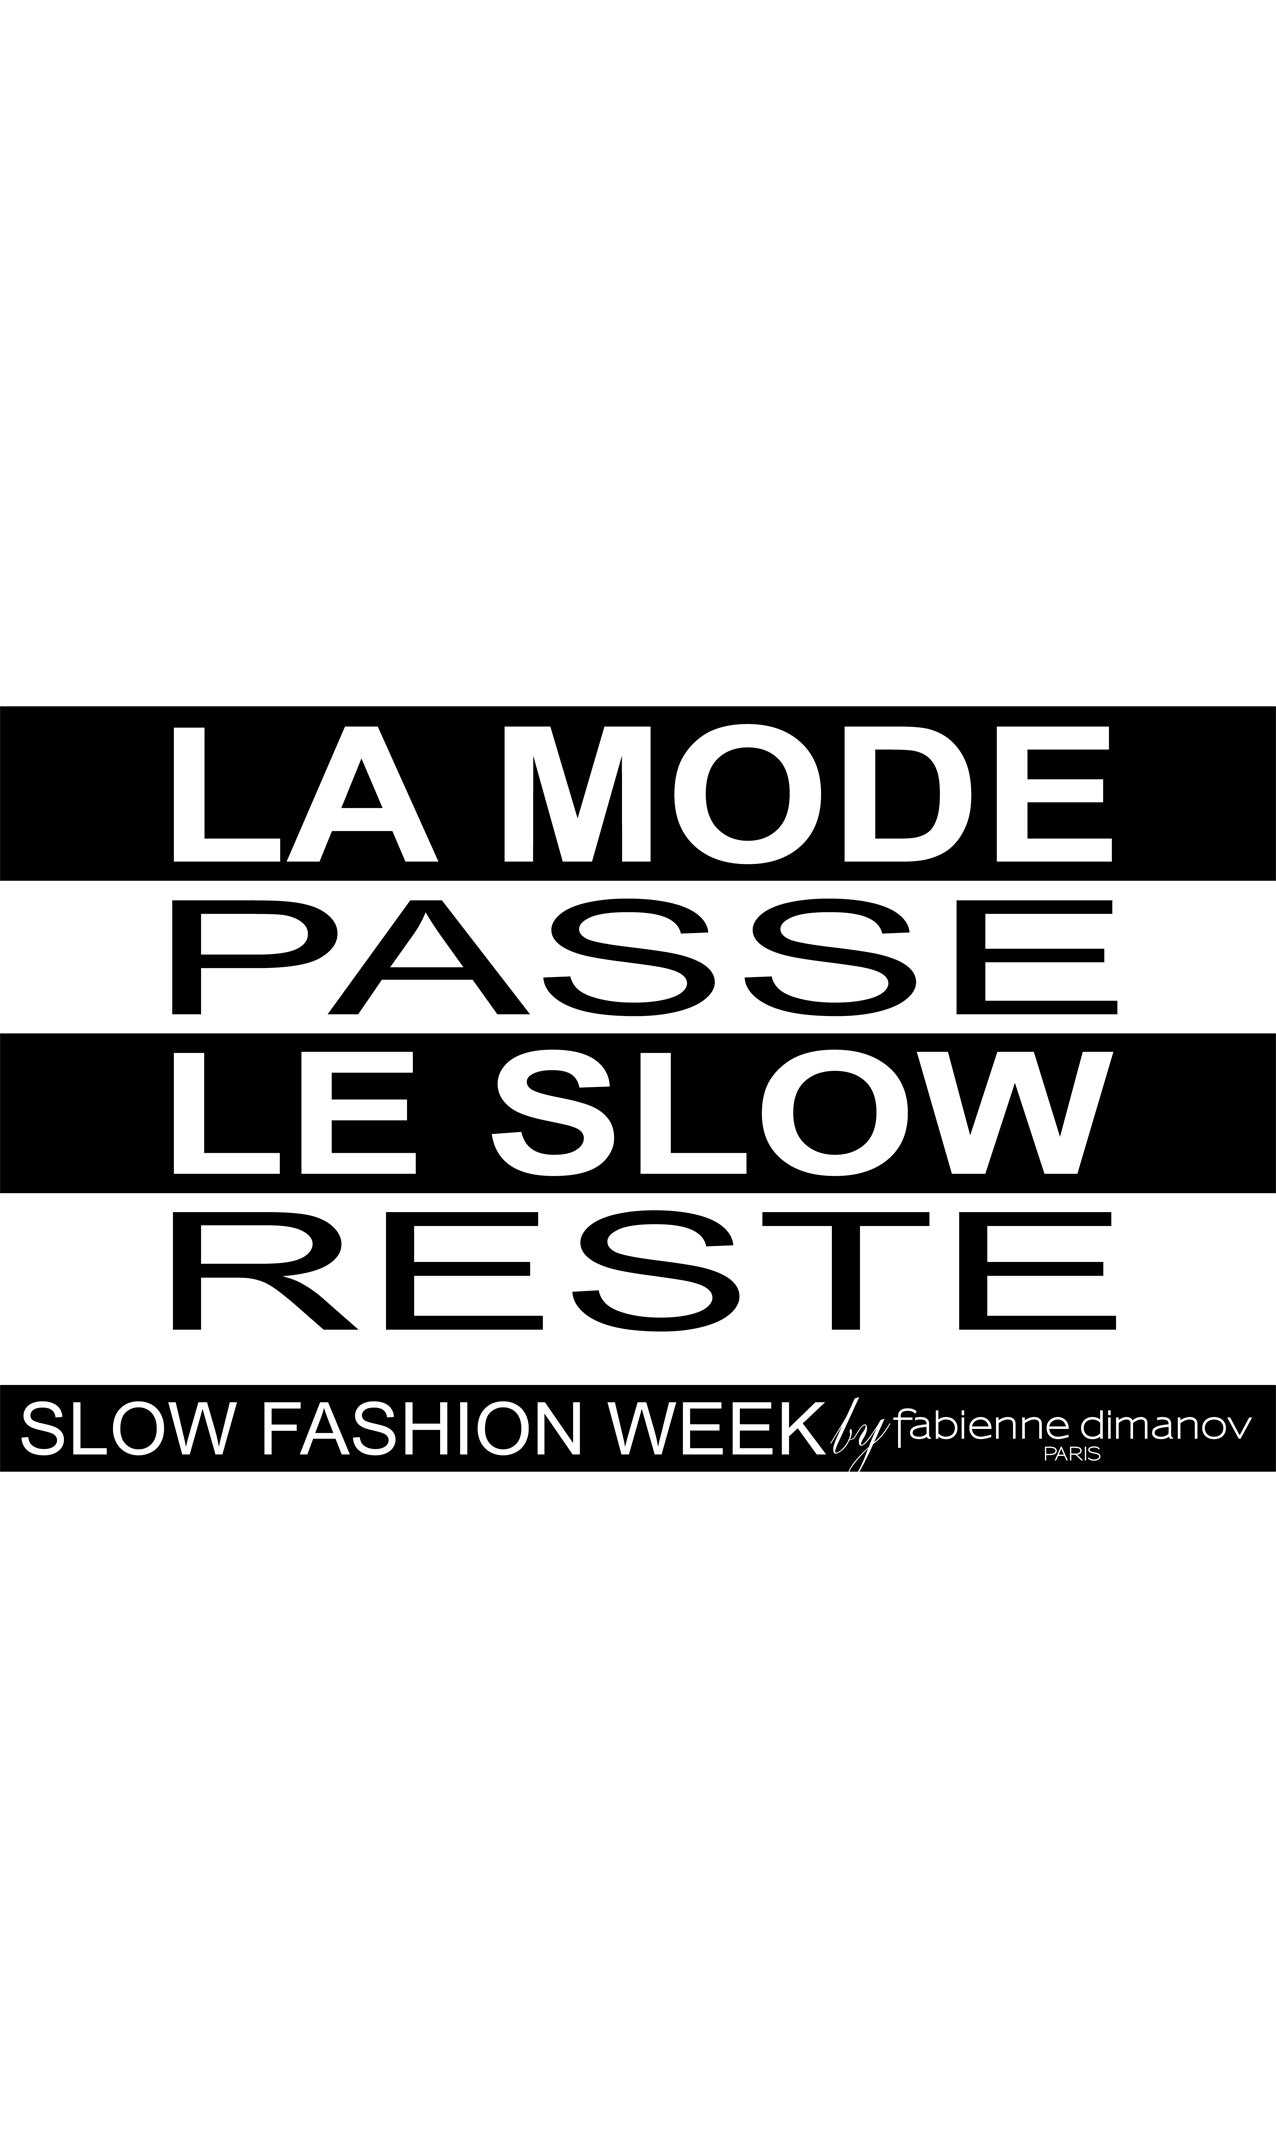 Slow Fashion Week - Fabienne Dimanov Paris